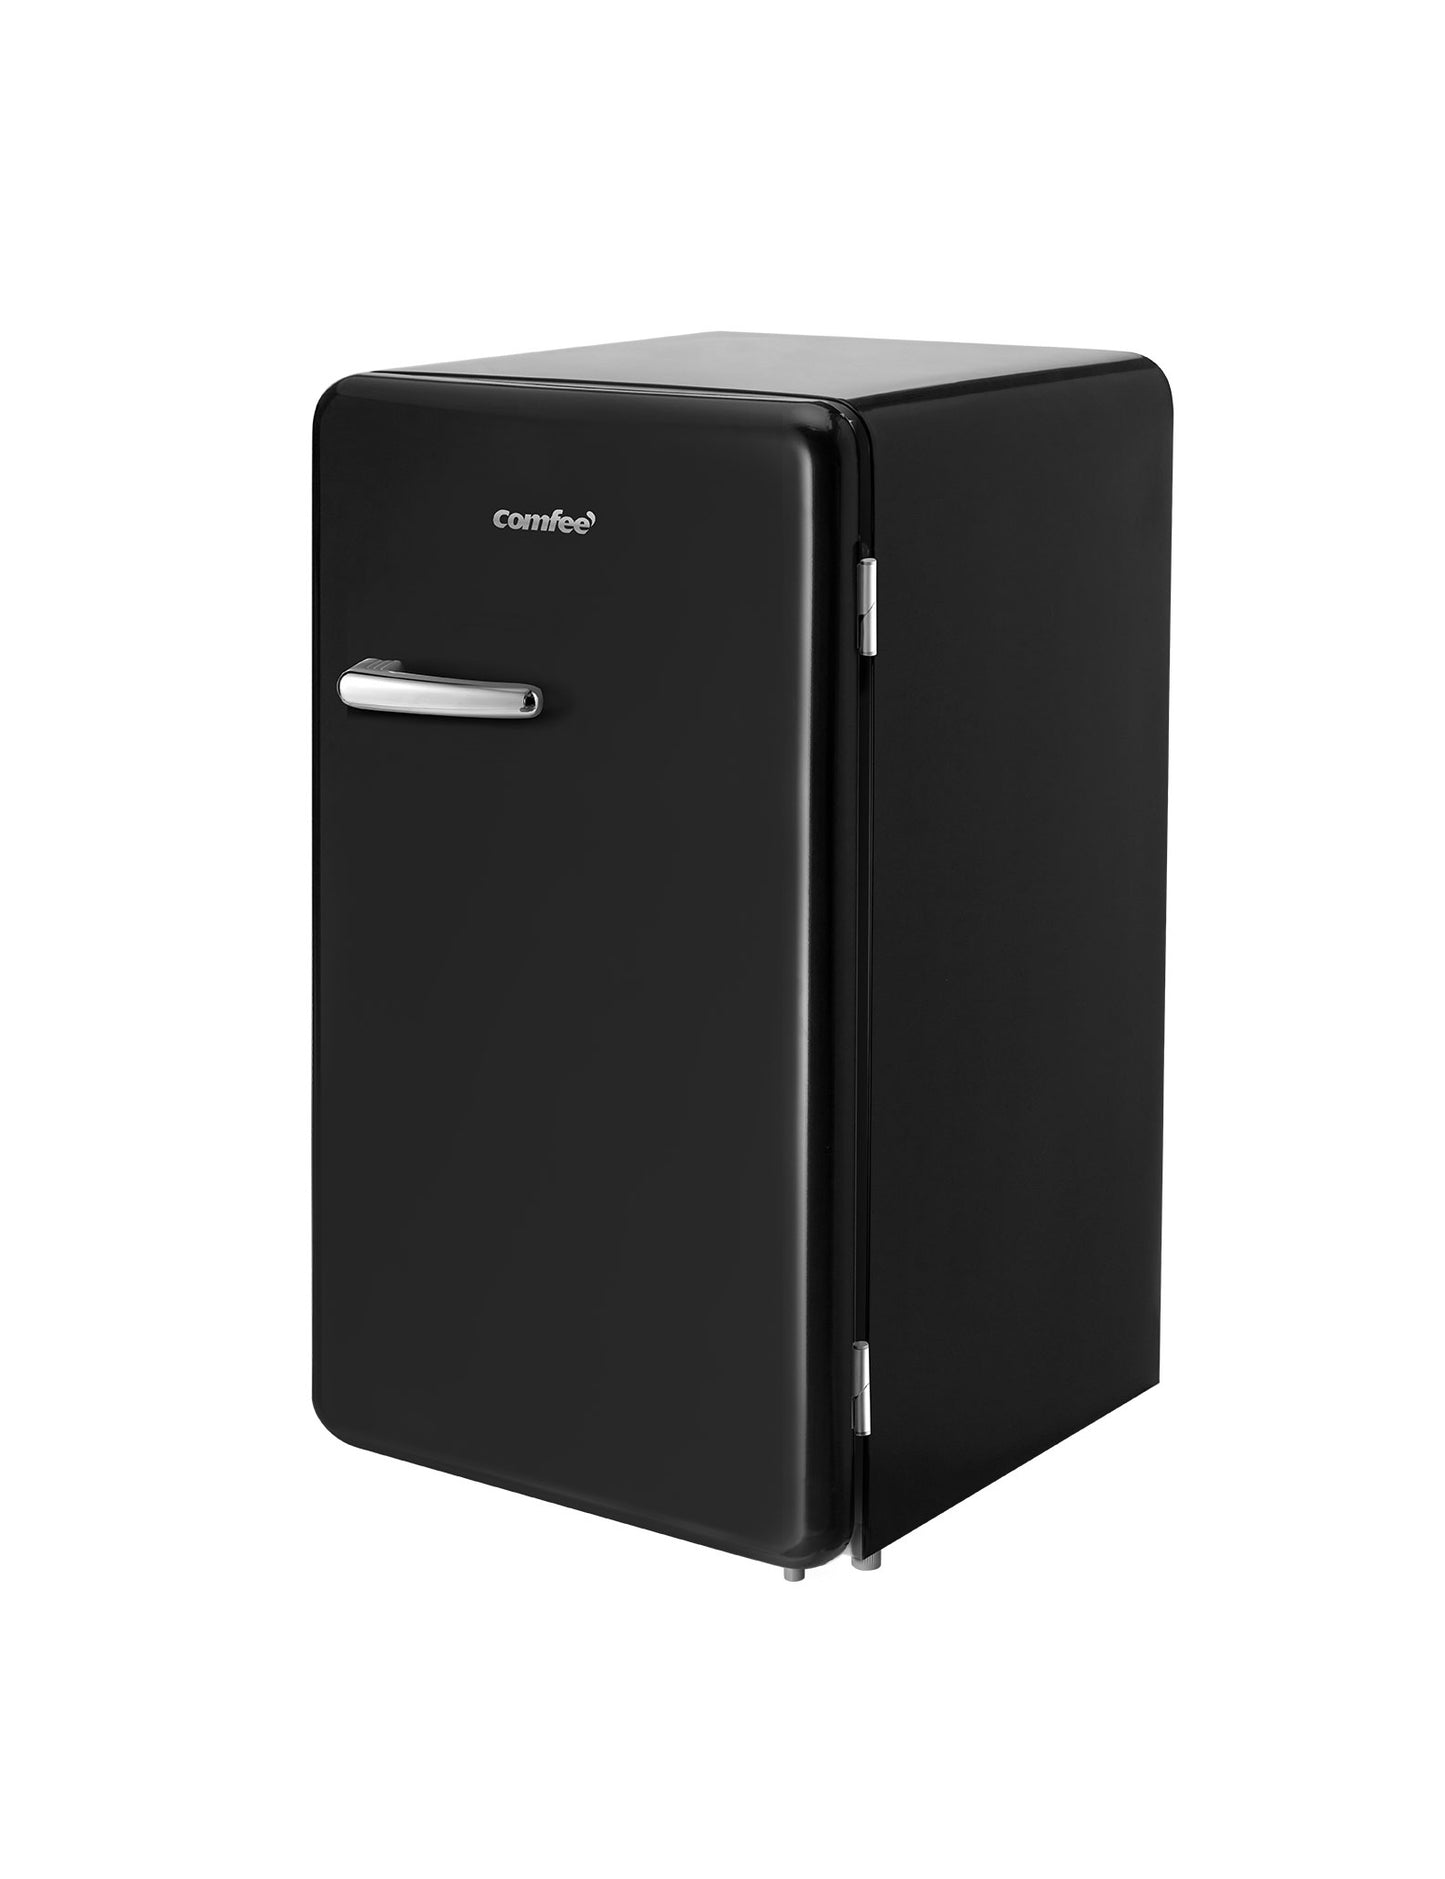 black compact retro style fridge